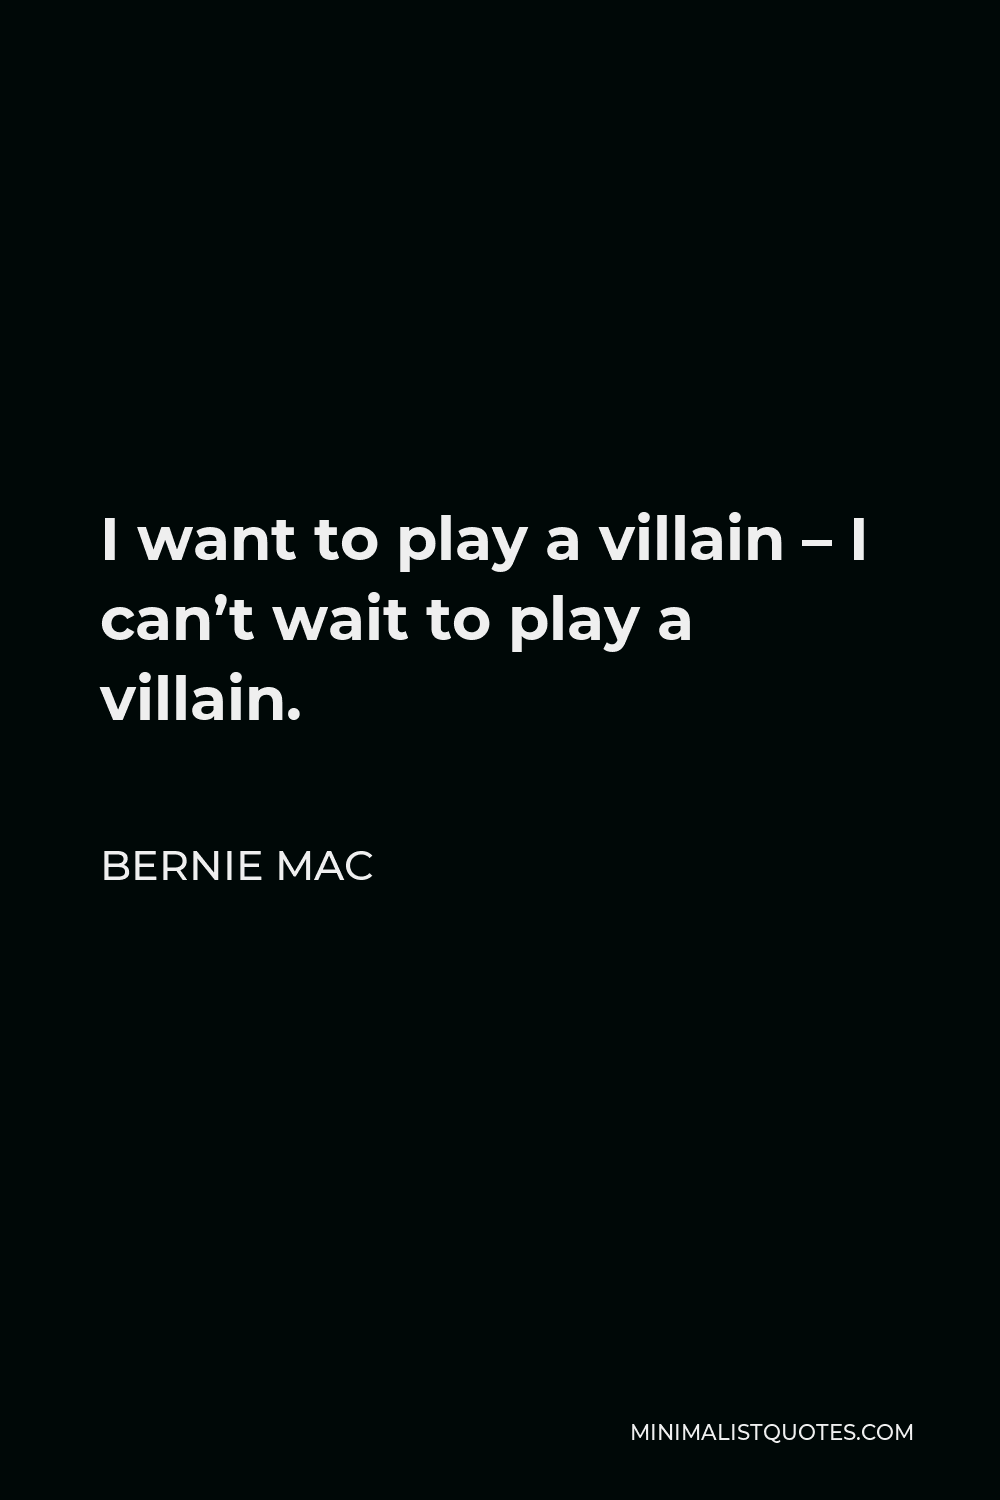 Bernie Mac Quote - I want to play a villain – I can’t wait to play a villain.